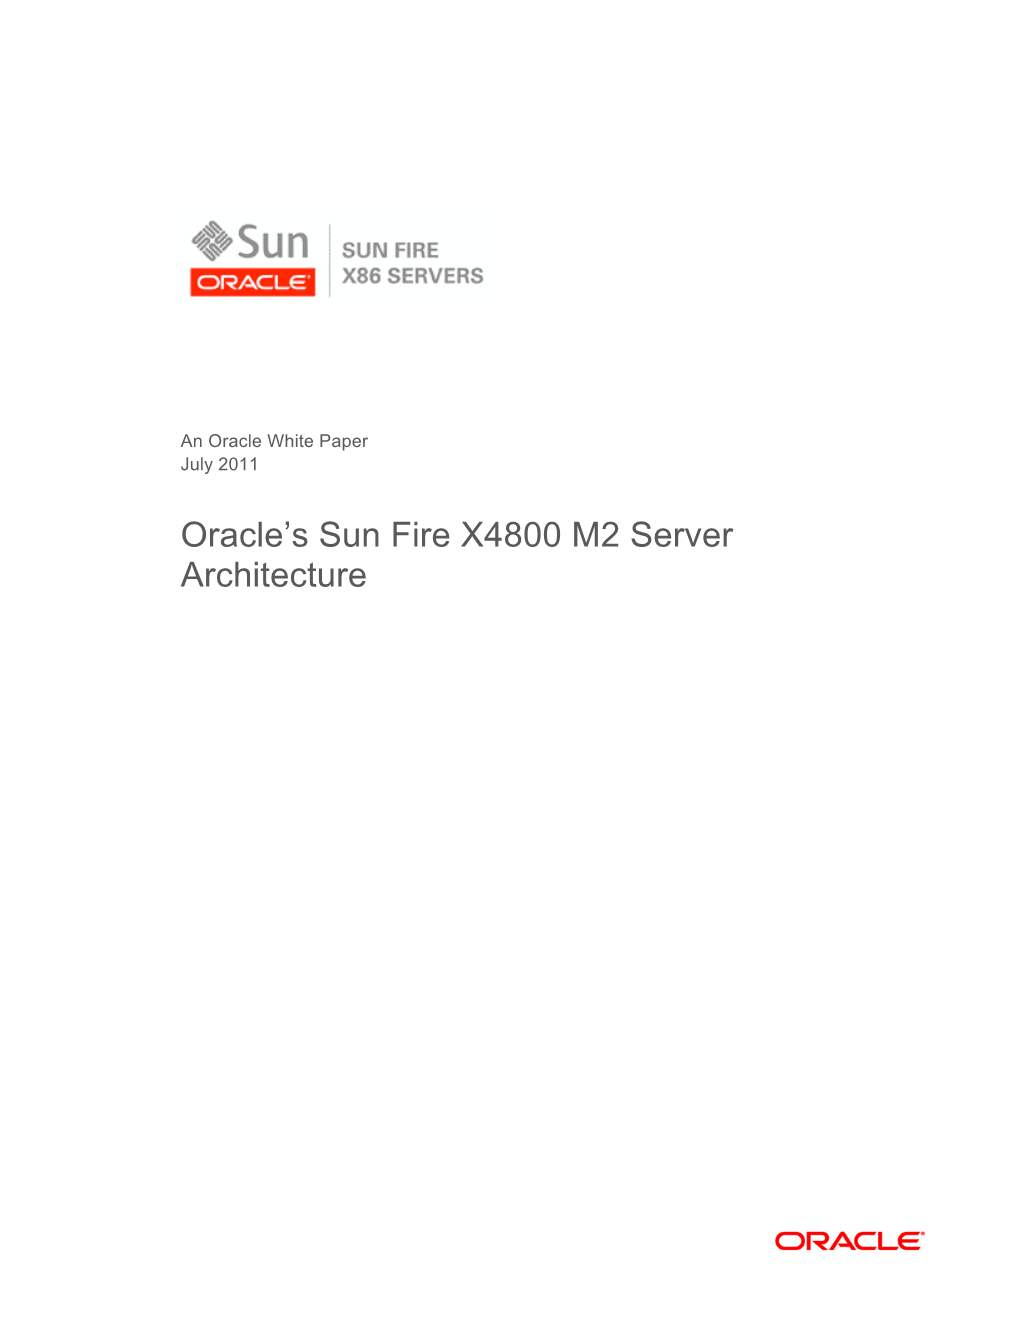 Oracle's Sun Fire X4800 M2 Server Architecture